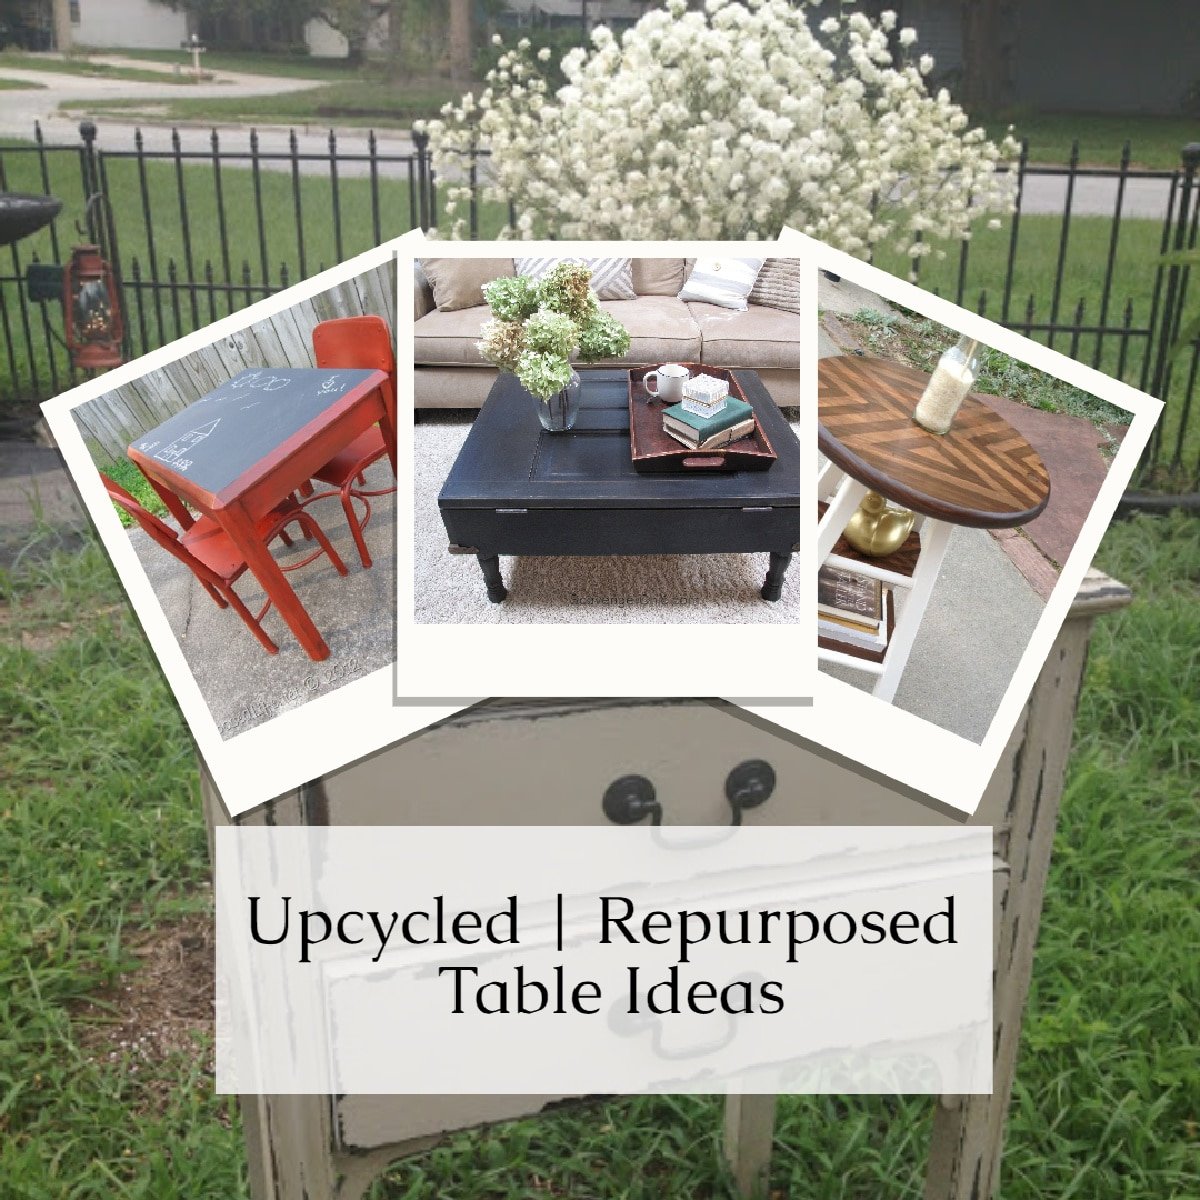 https://www.myrepurposedlife.com/wp-content/uploads/2021/04/upcycled-repurposed-table-ideas-0hawc-igpost.jpg